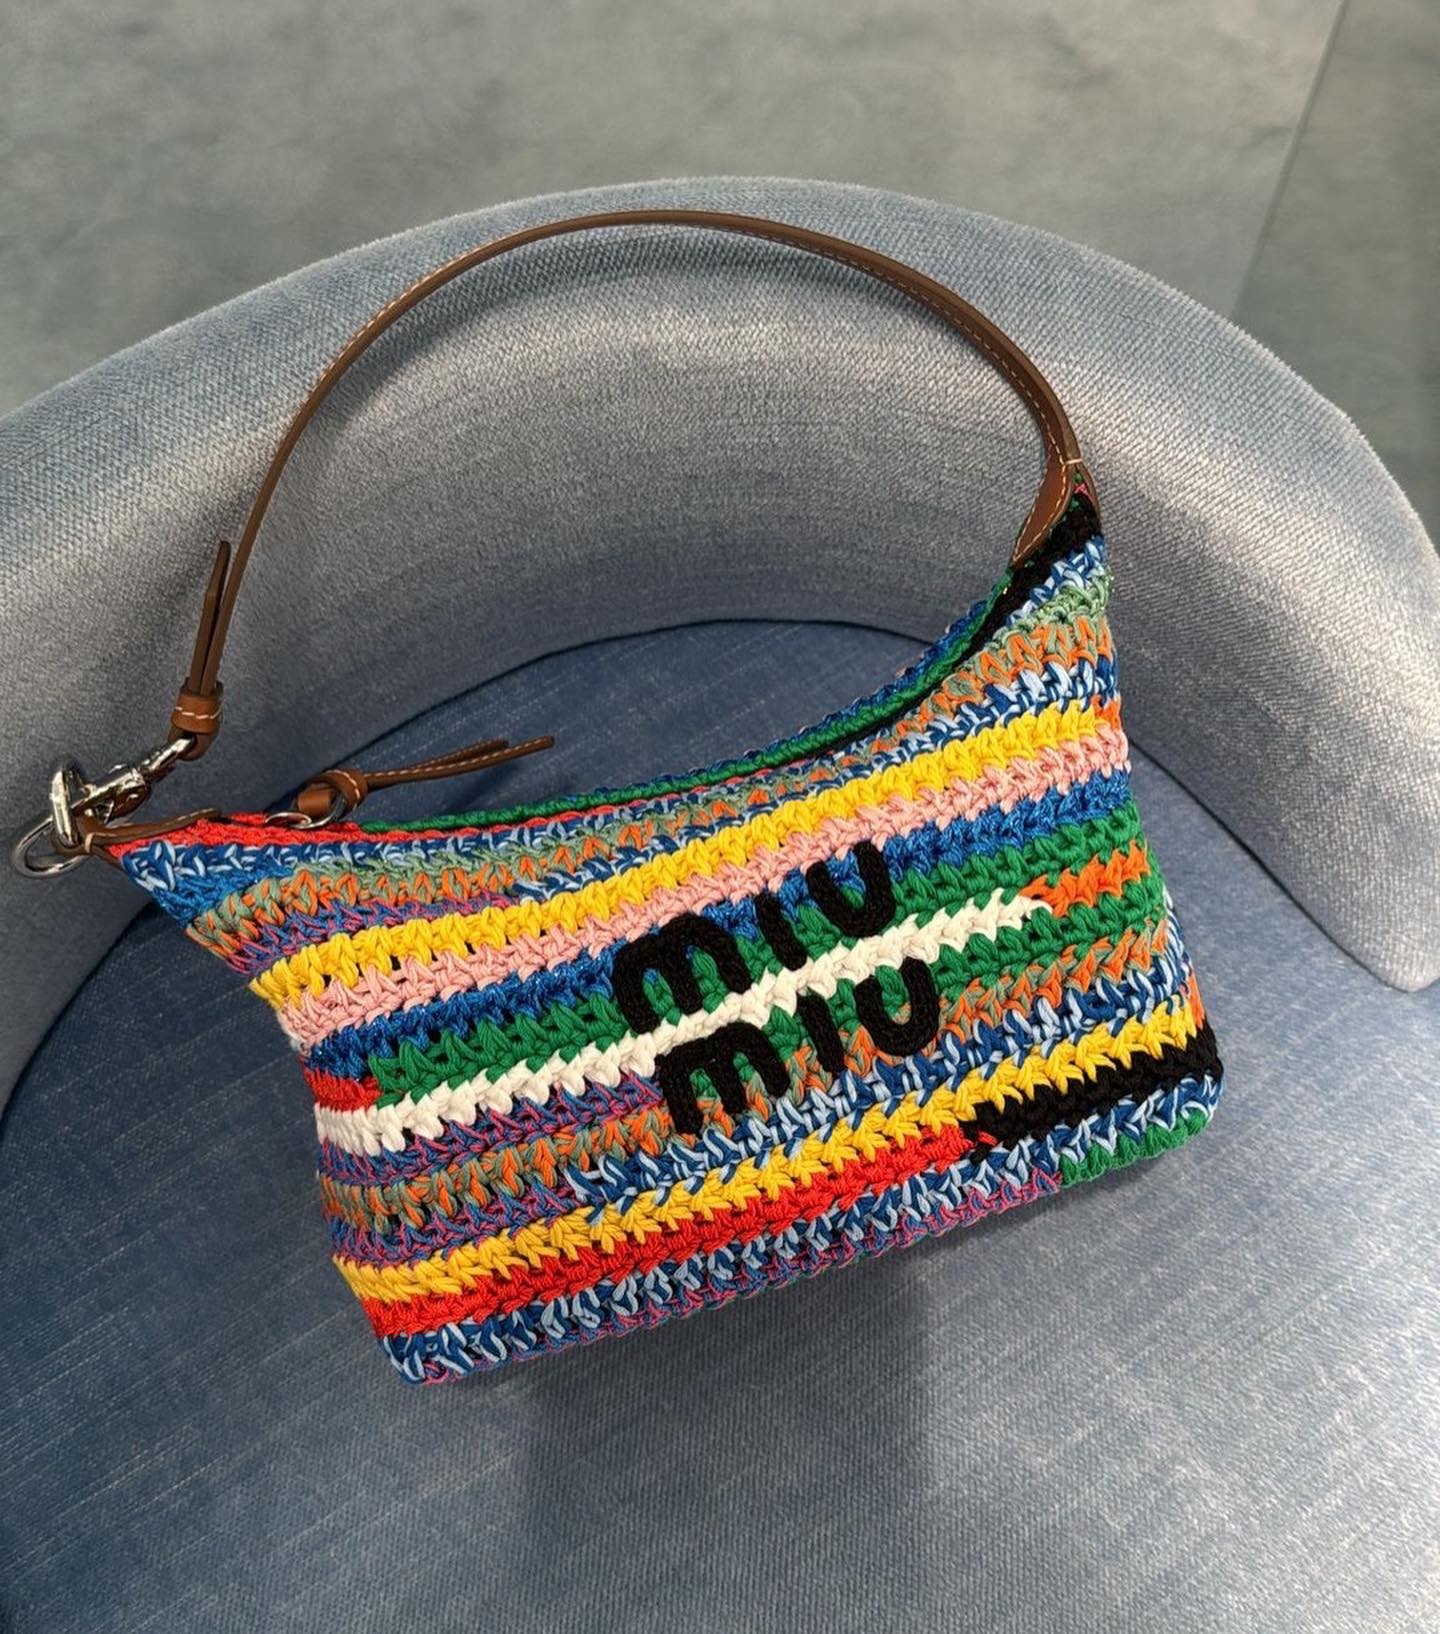 @threadsstyling Miu Miu colorful crochet bag.